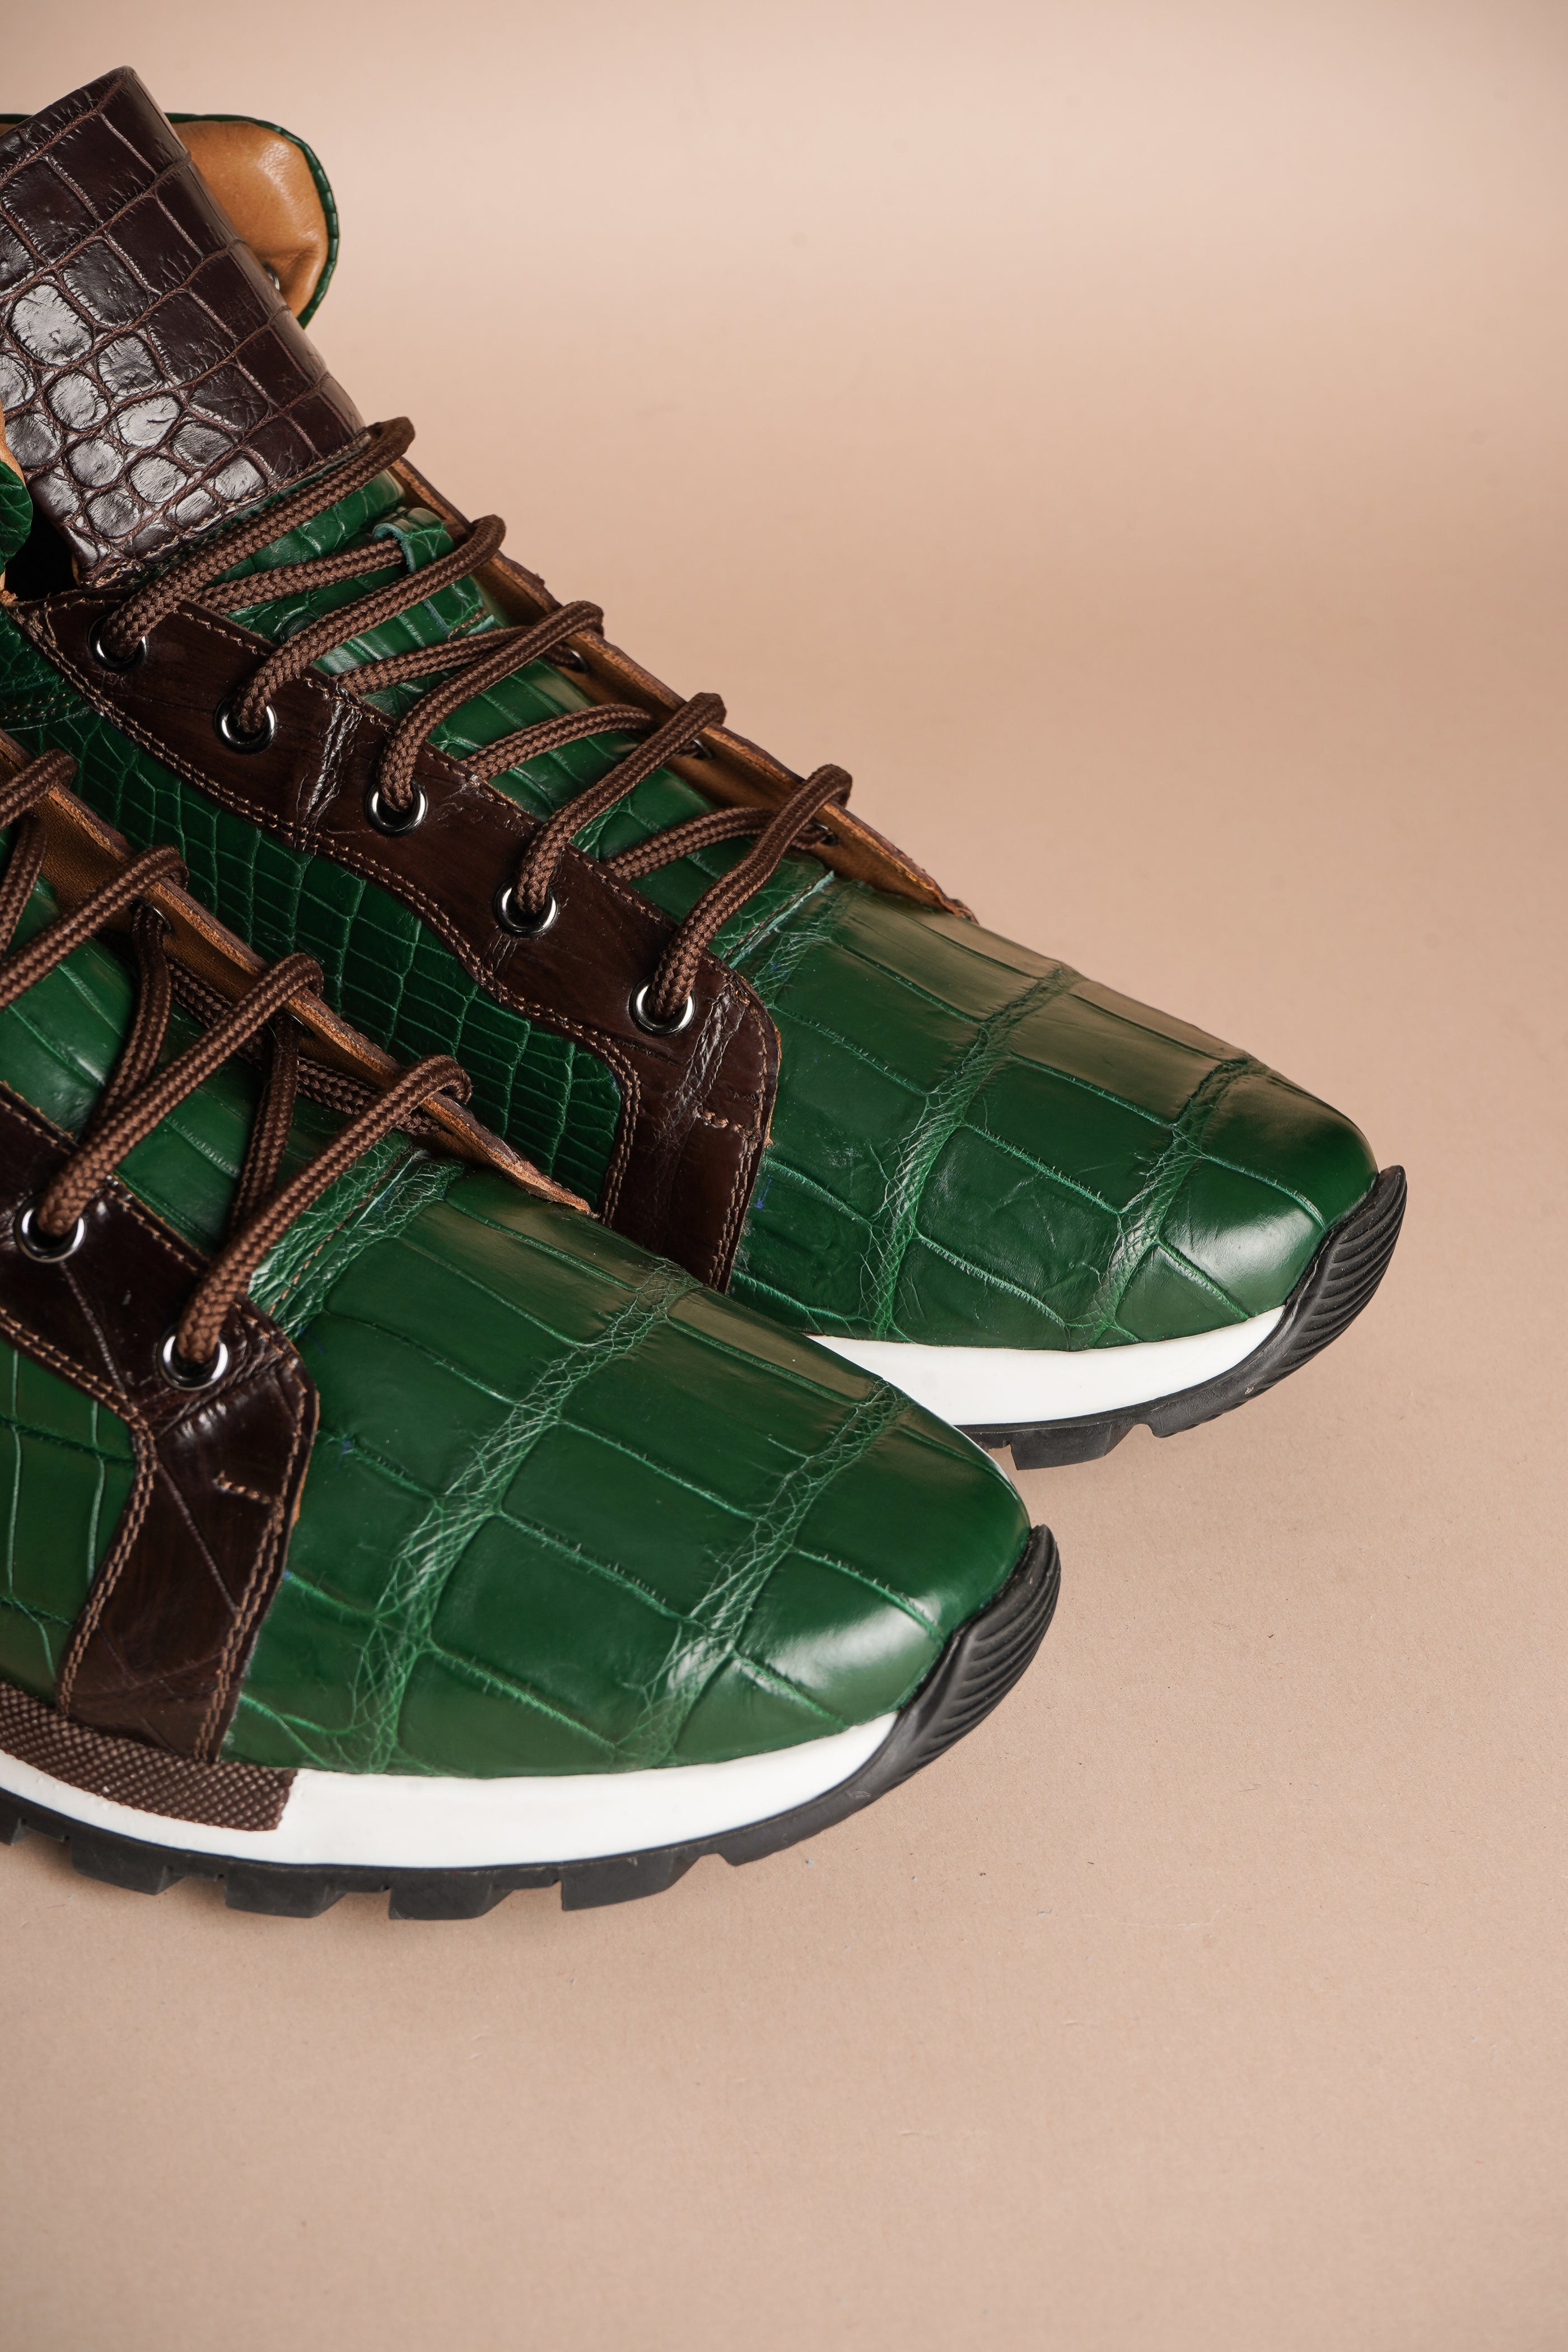 Green & Brown Crocodile Leather Sneakers